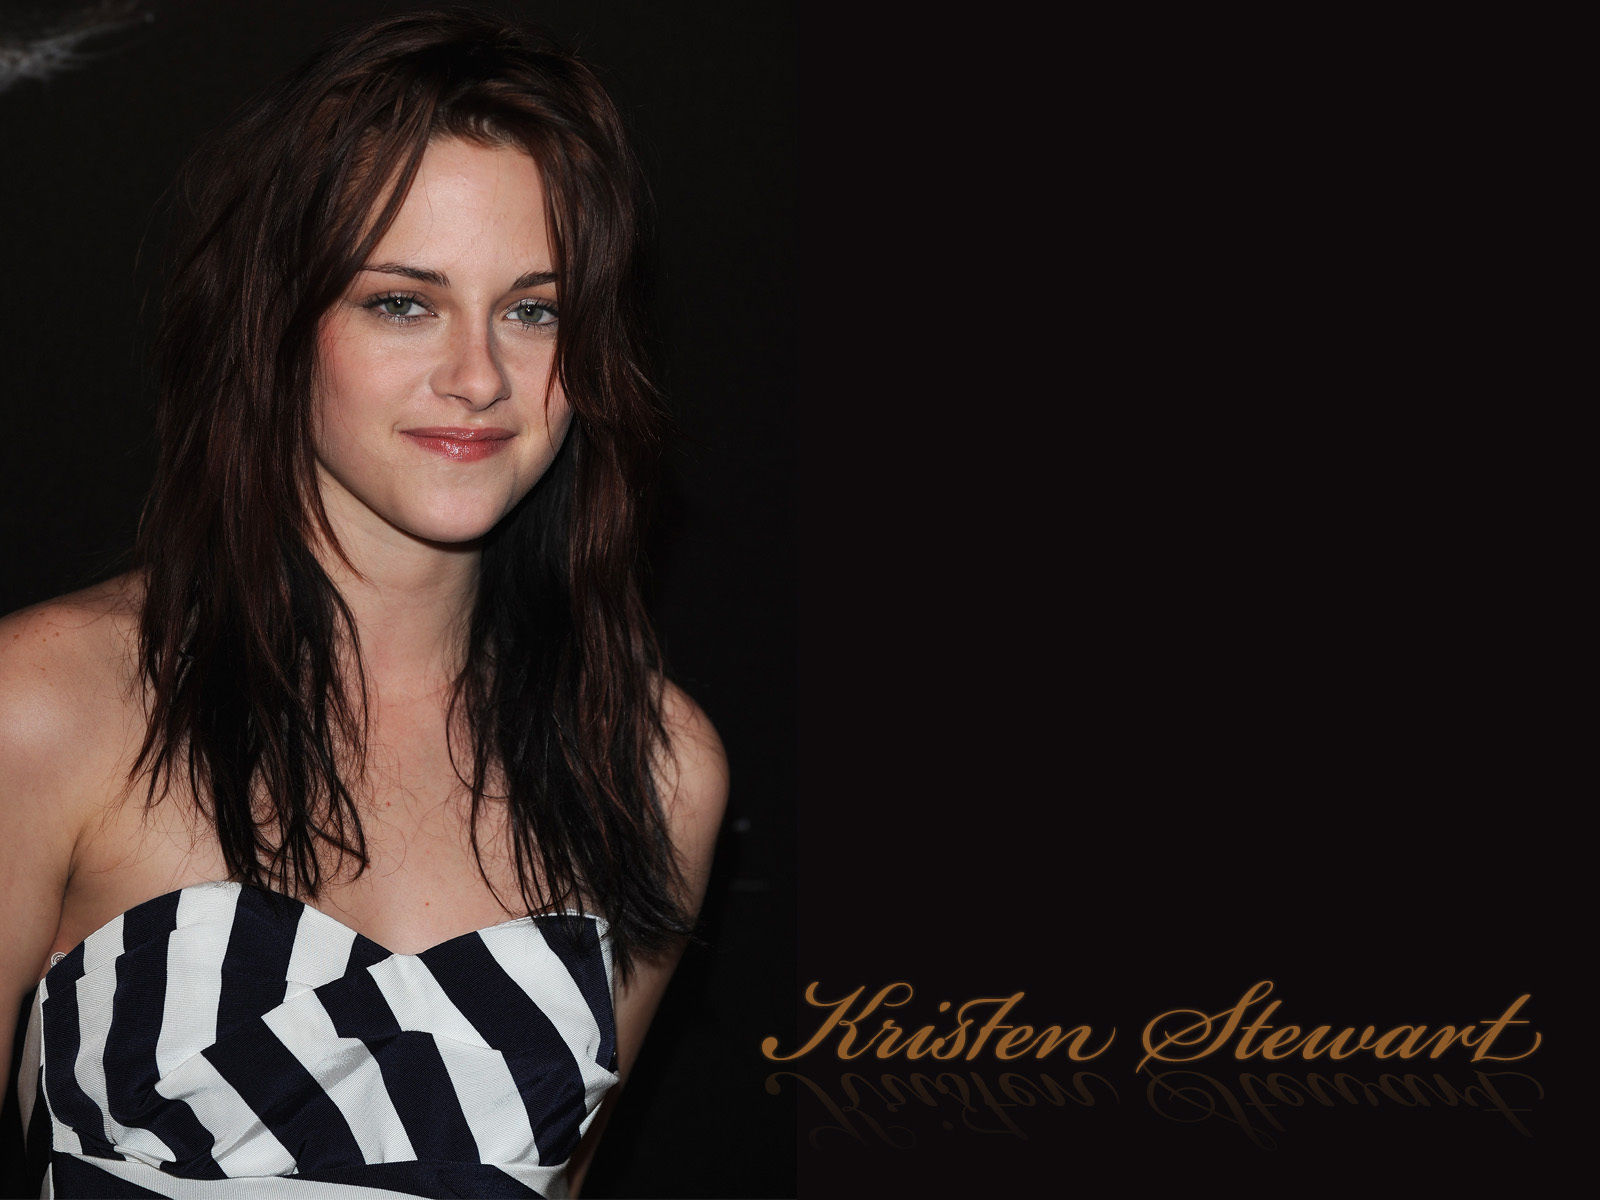 Kristen Stewart wallpaper - Kristen Stewart Wallpaper (16174922) - Fanpop